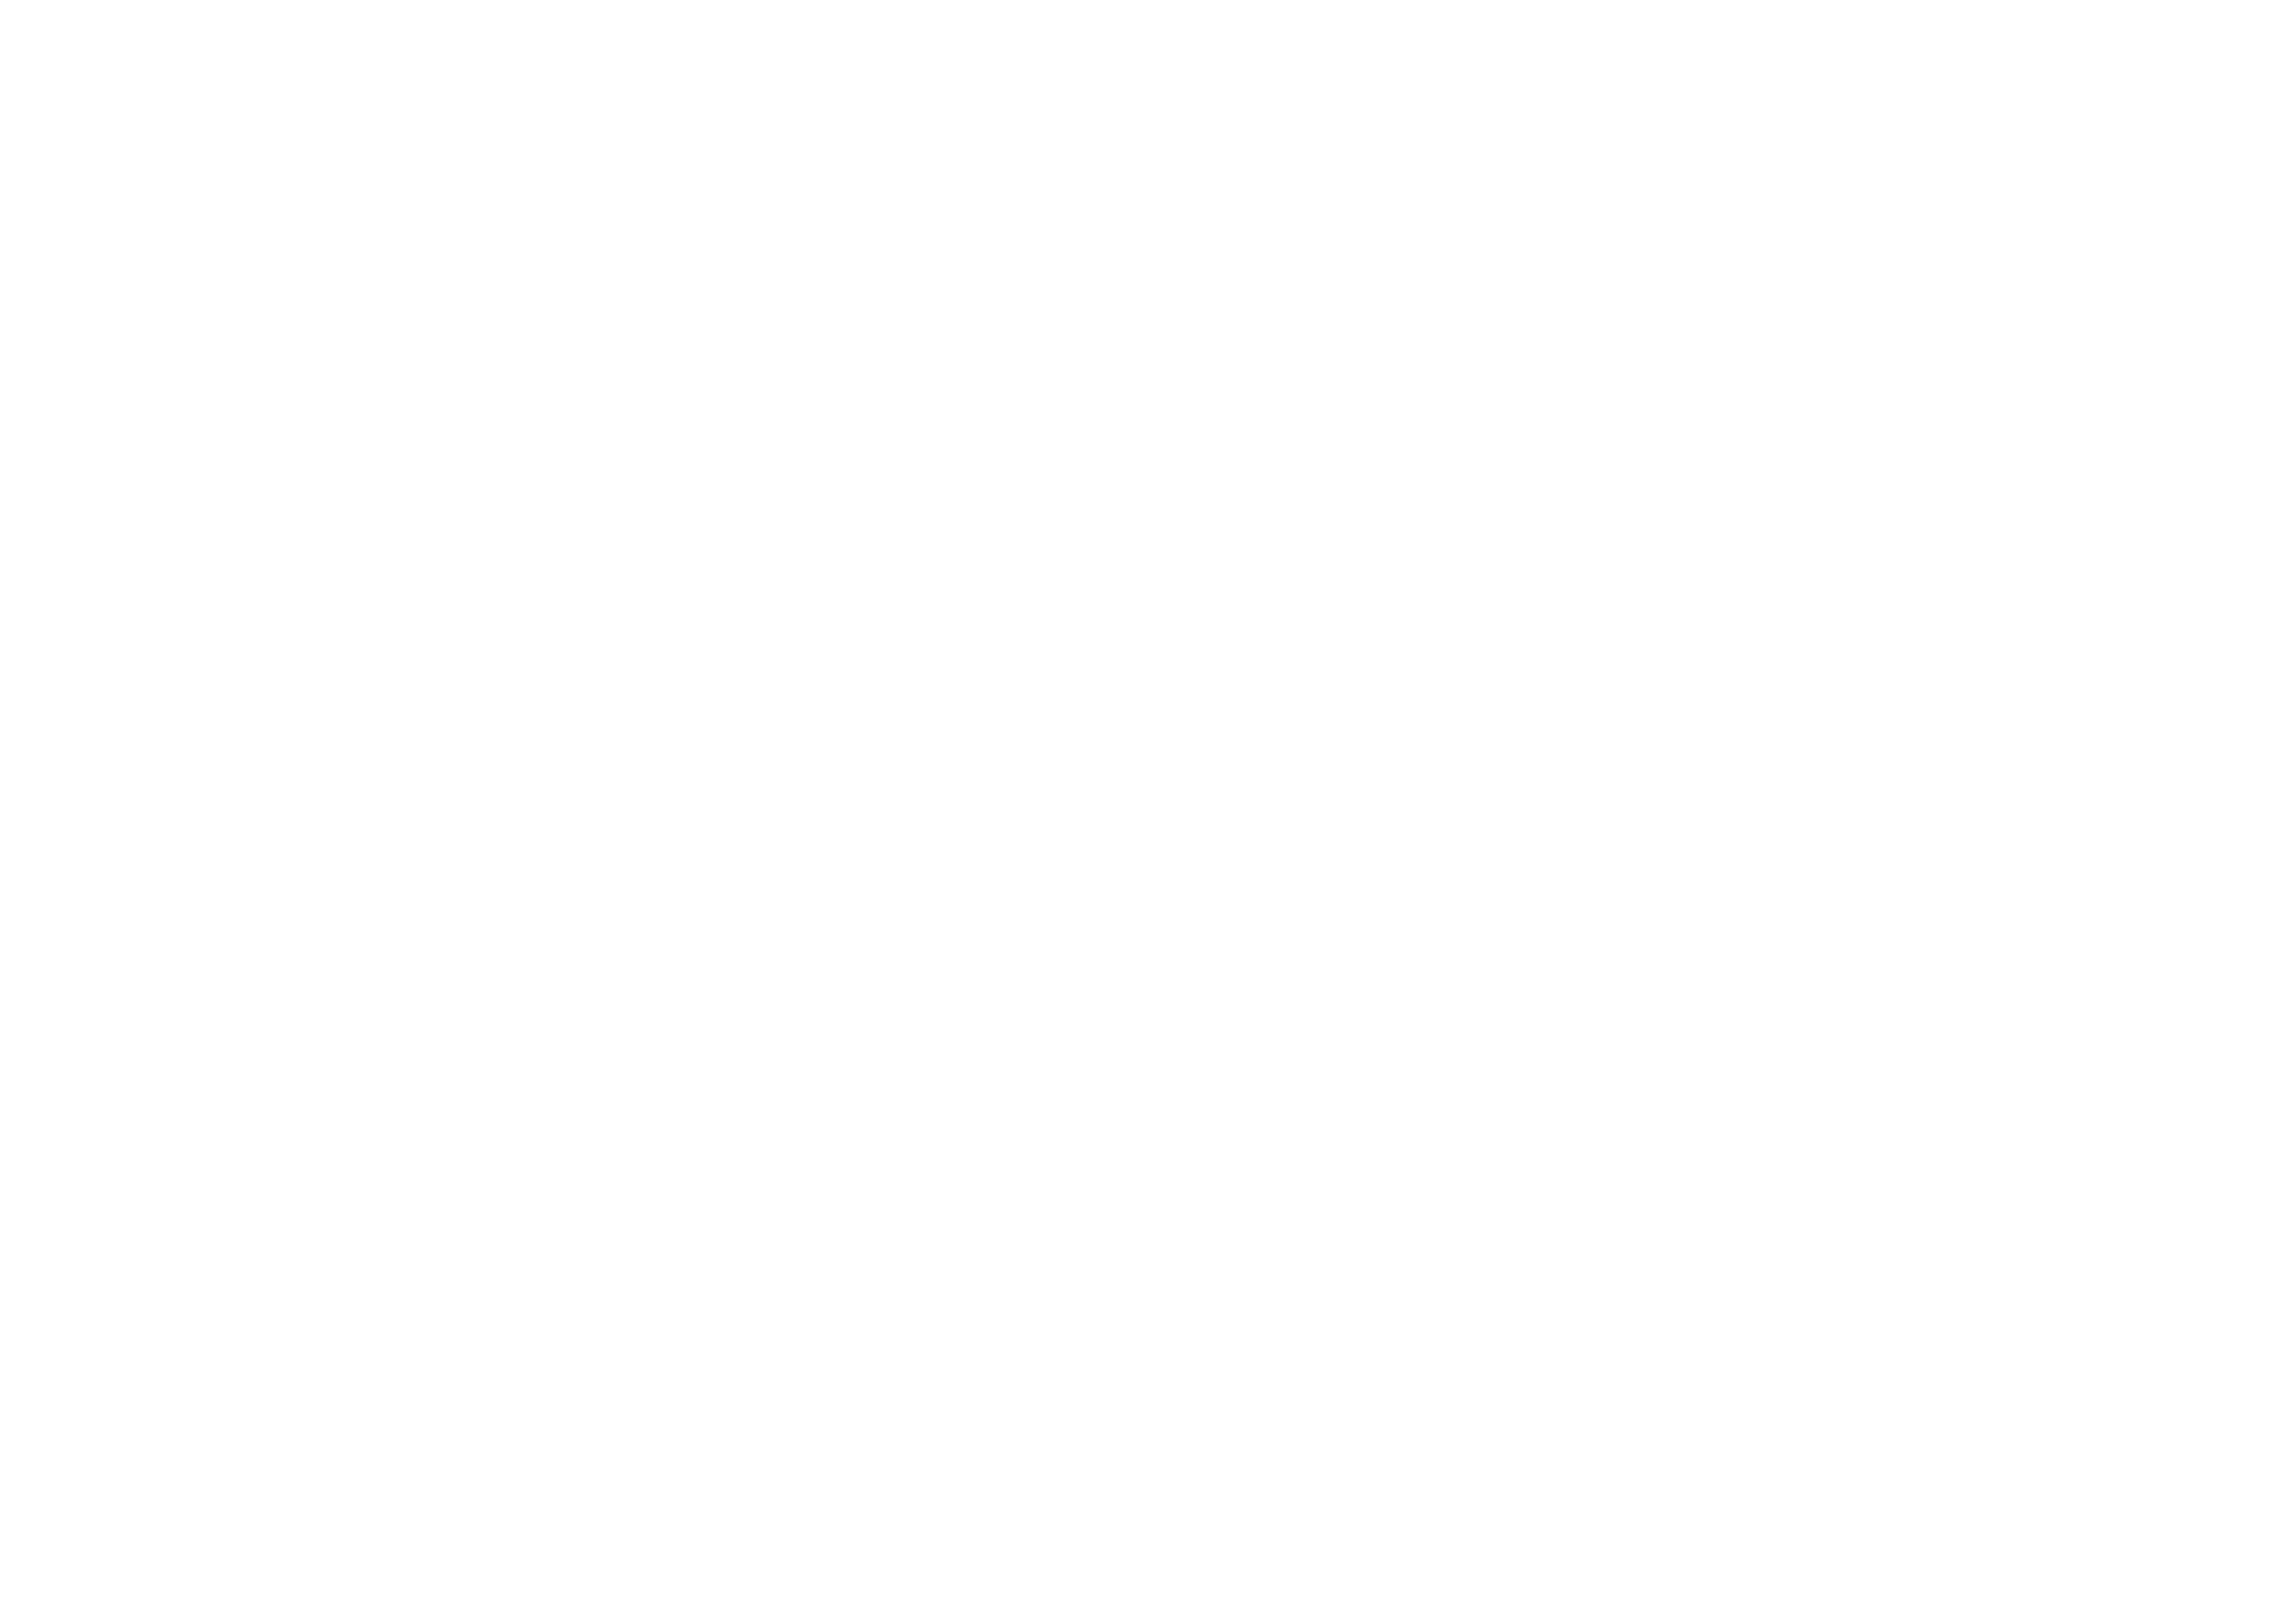 Move Heroes